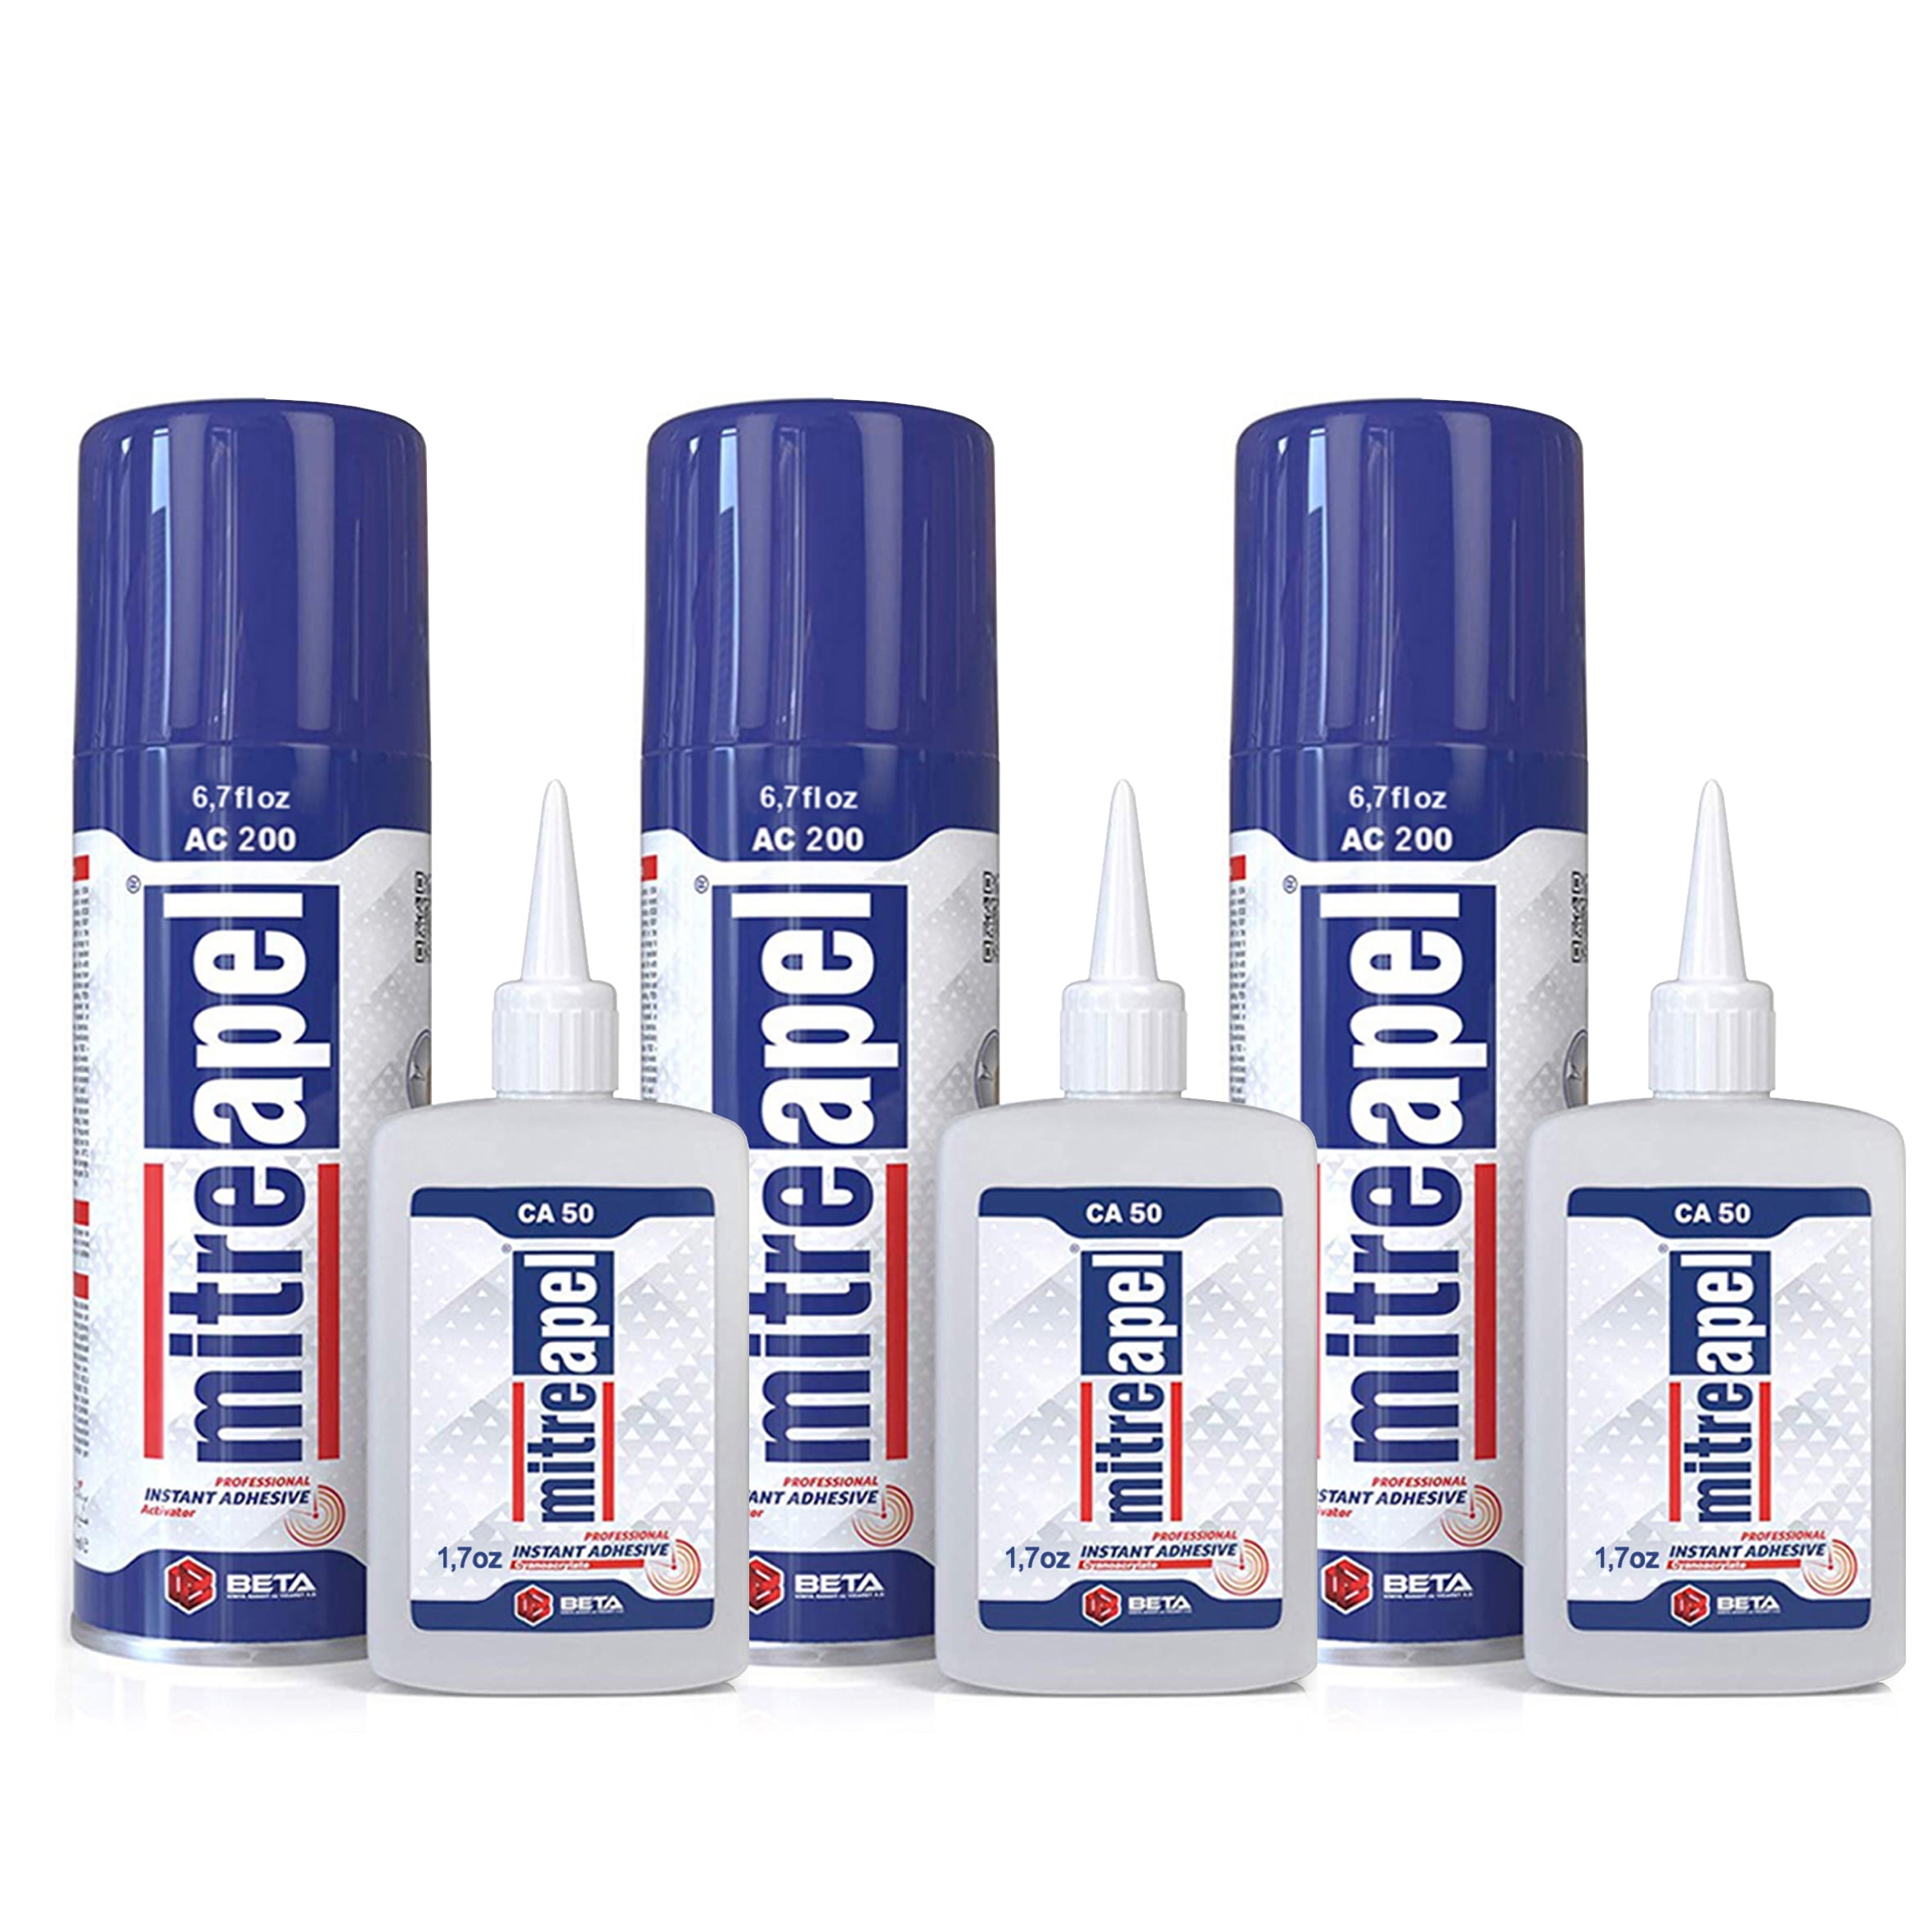 MITREAPEL Super CA Glue (4.6 oz.) with Spray Adhesive Activator